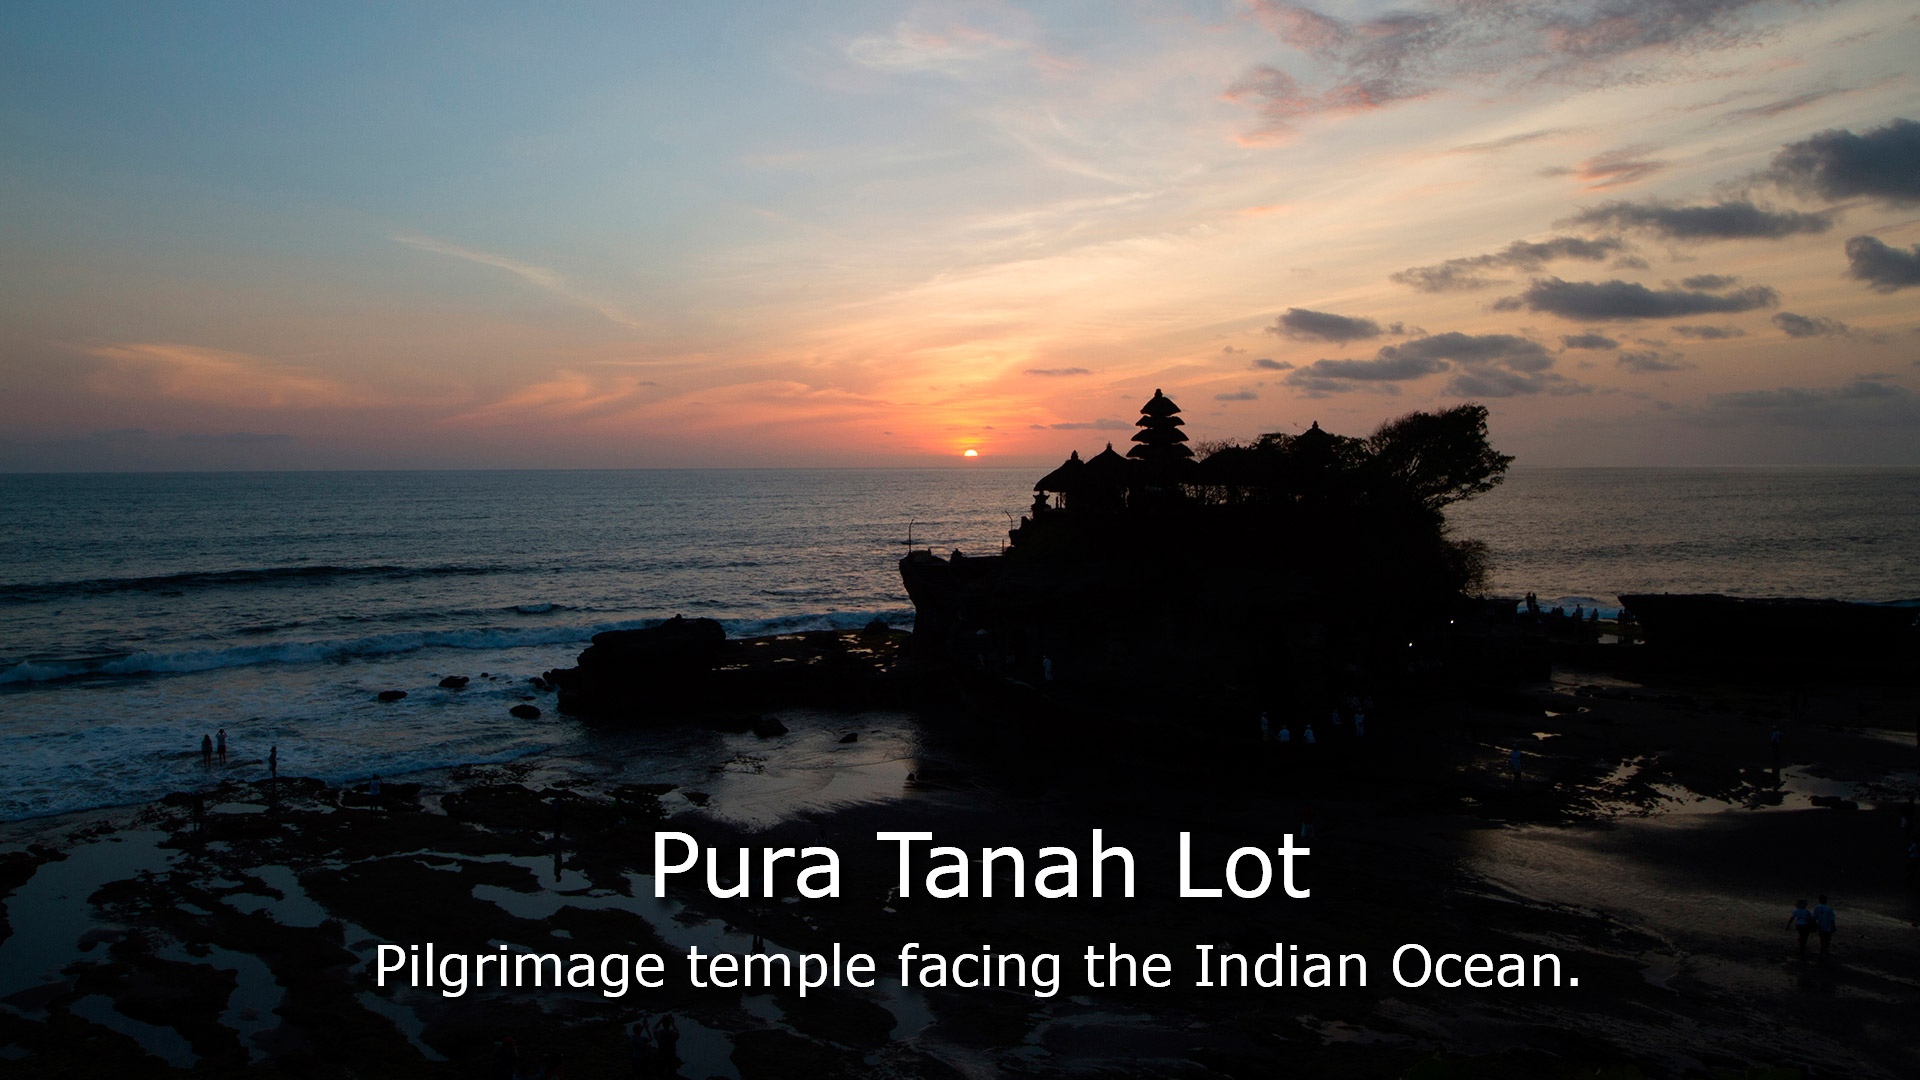 Pura Tanah Lot - Pilgrimage temple facing the Indian Ocean